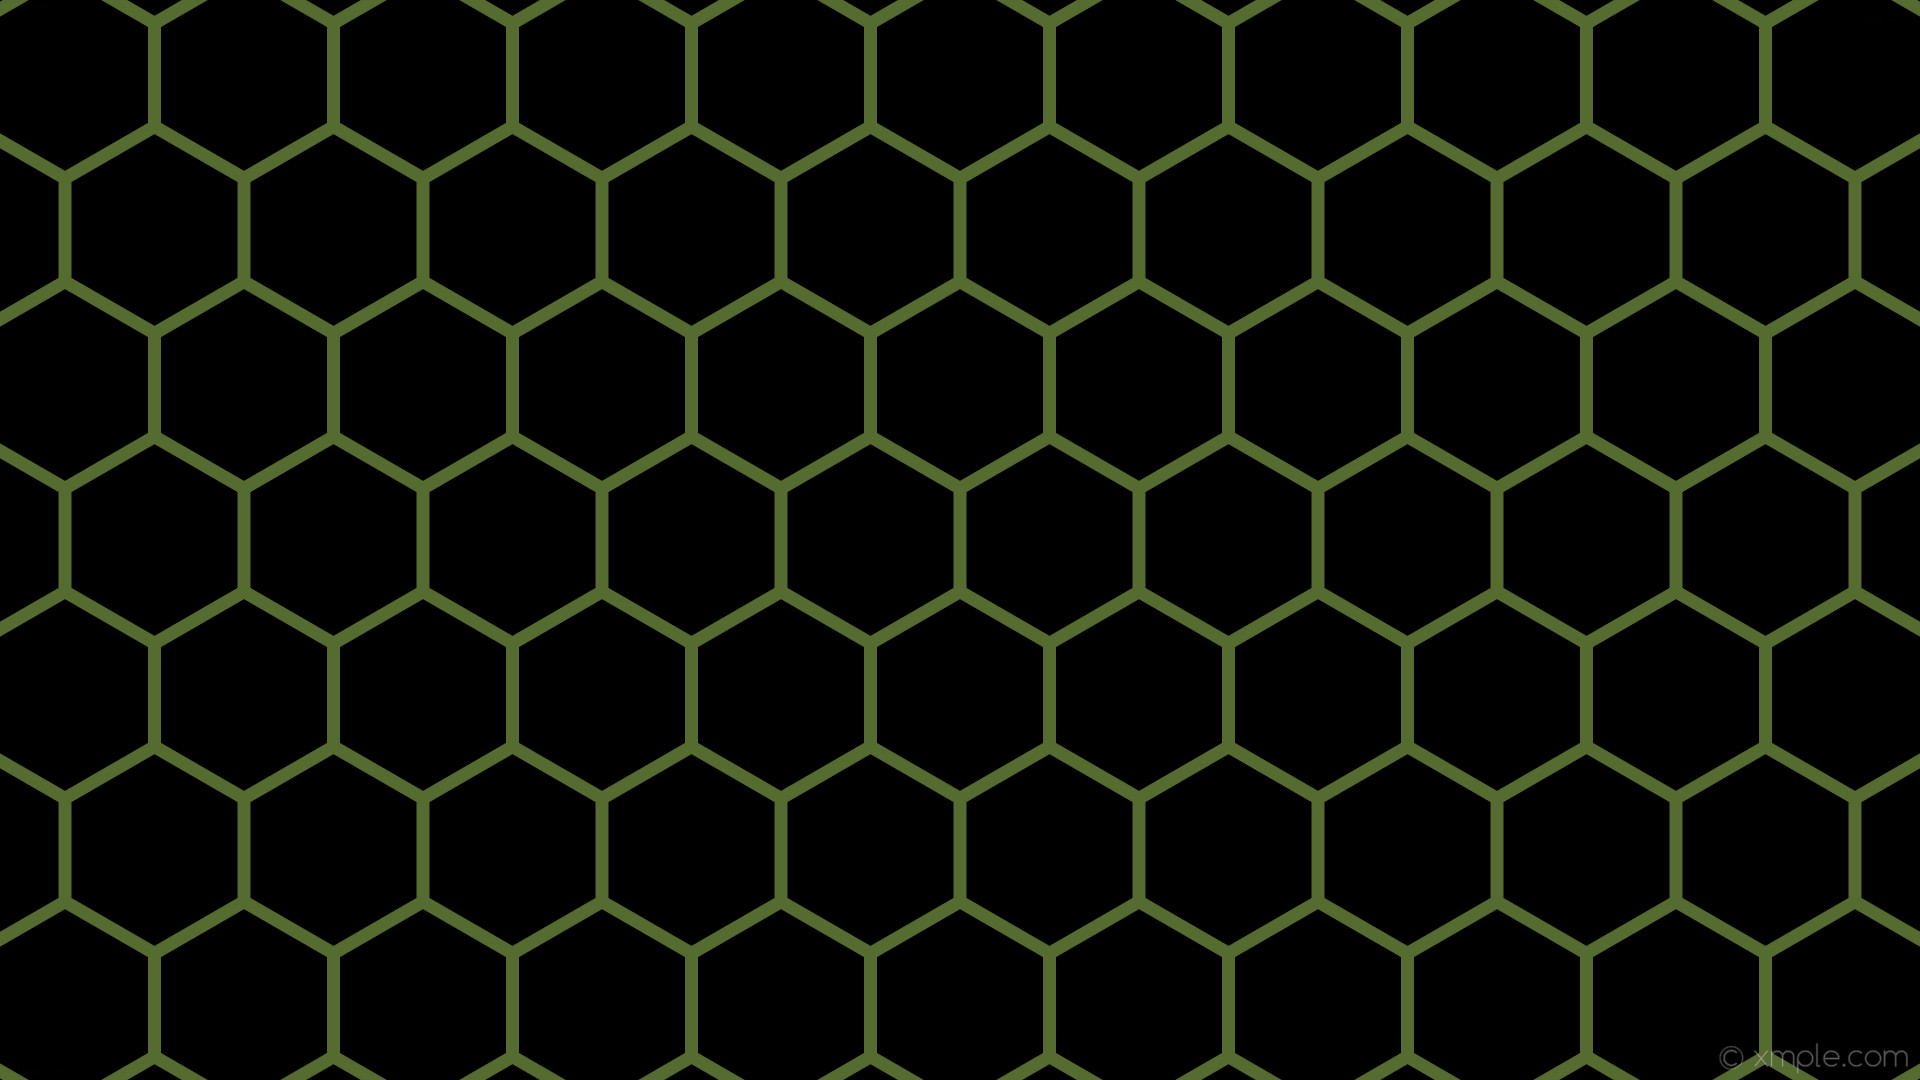 1920x1080 wallpaper beehive black honeycomb green hexagon dark olive green #000000  #556b2f 0Â° 13px